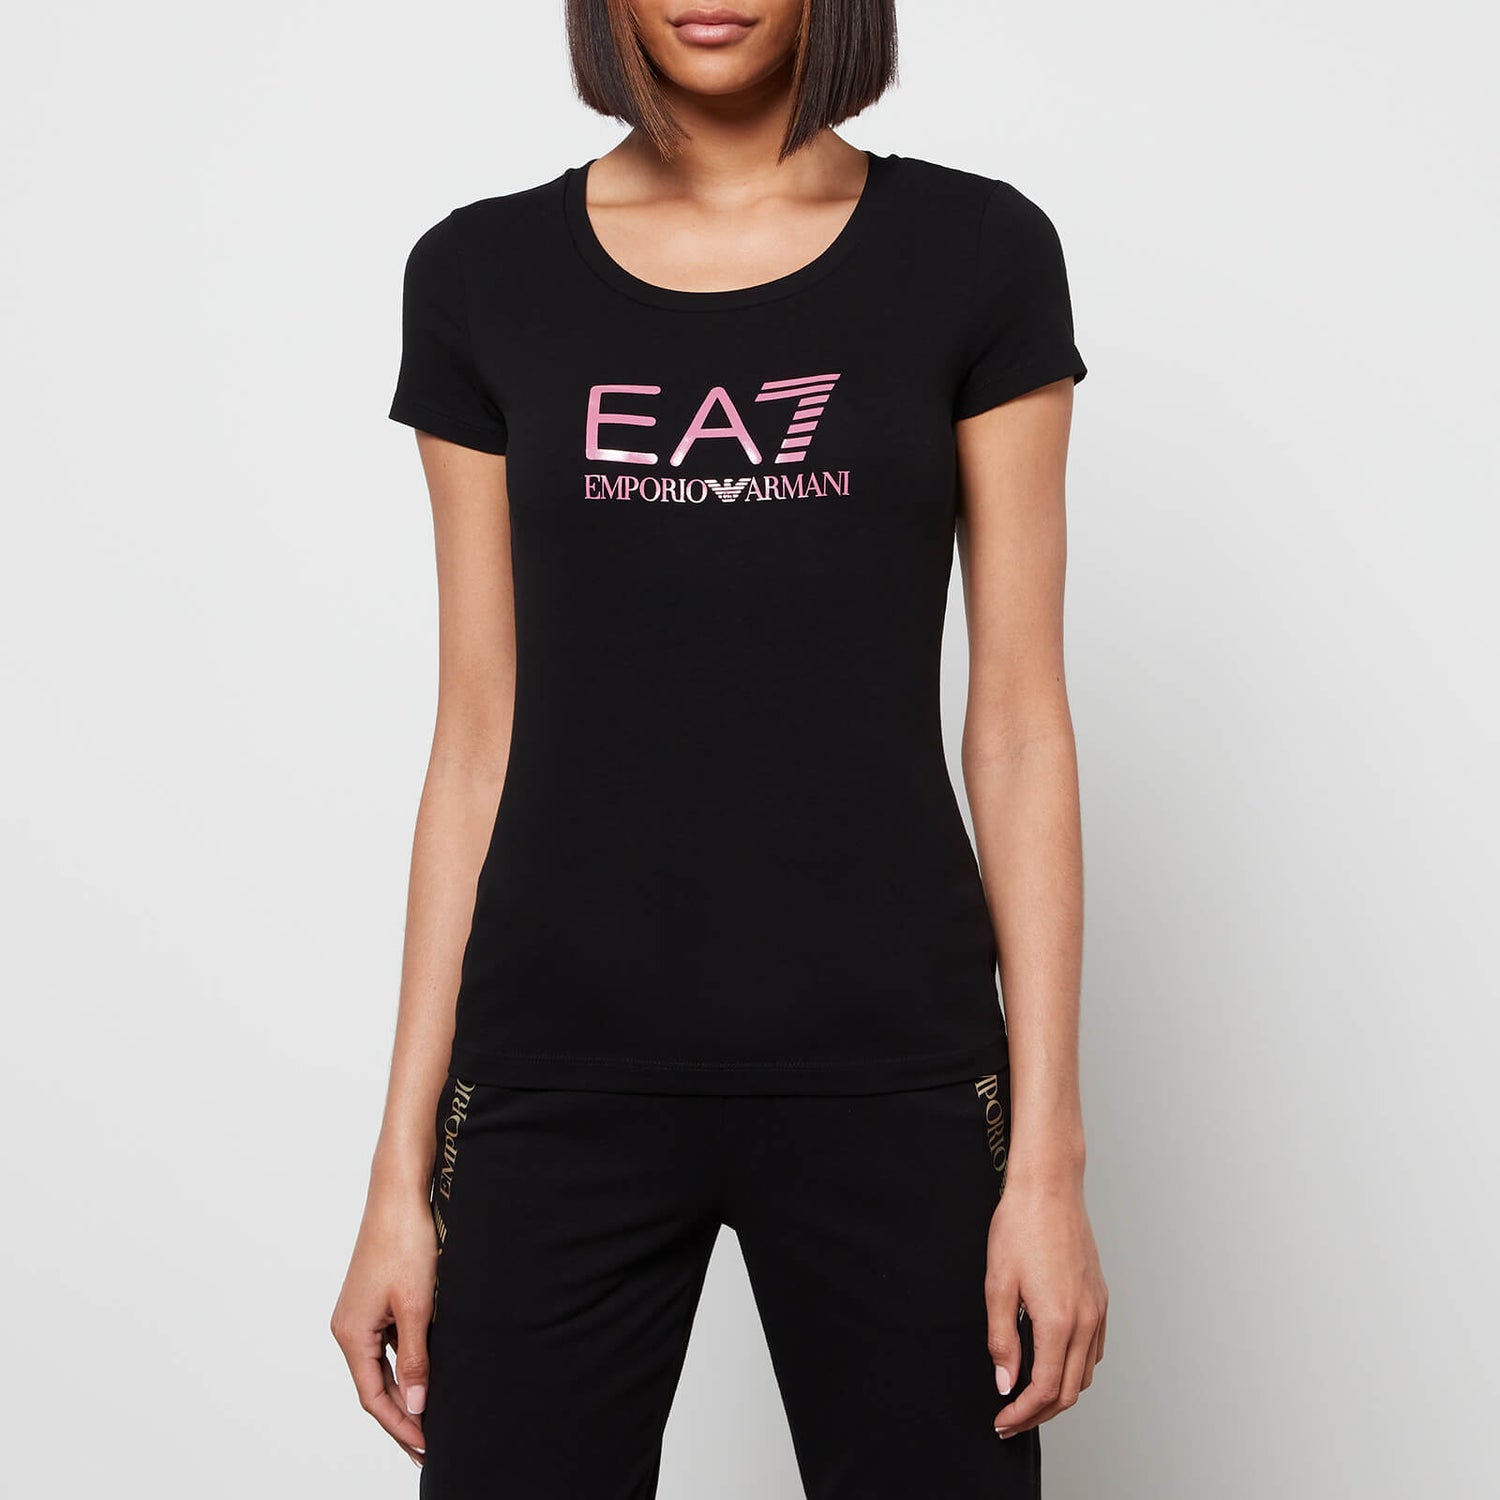 Emporio Armani EA7 Women's Train Shiny T-Shirt - Black/Heather Rose